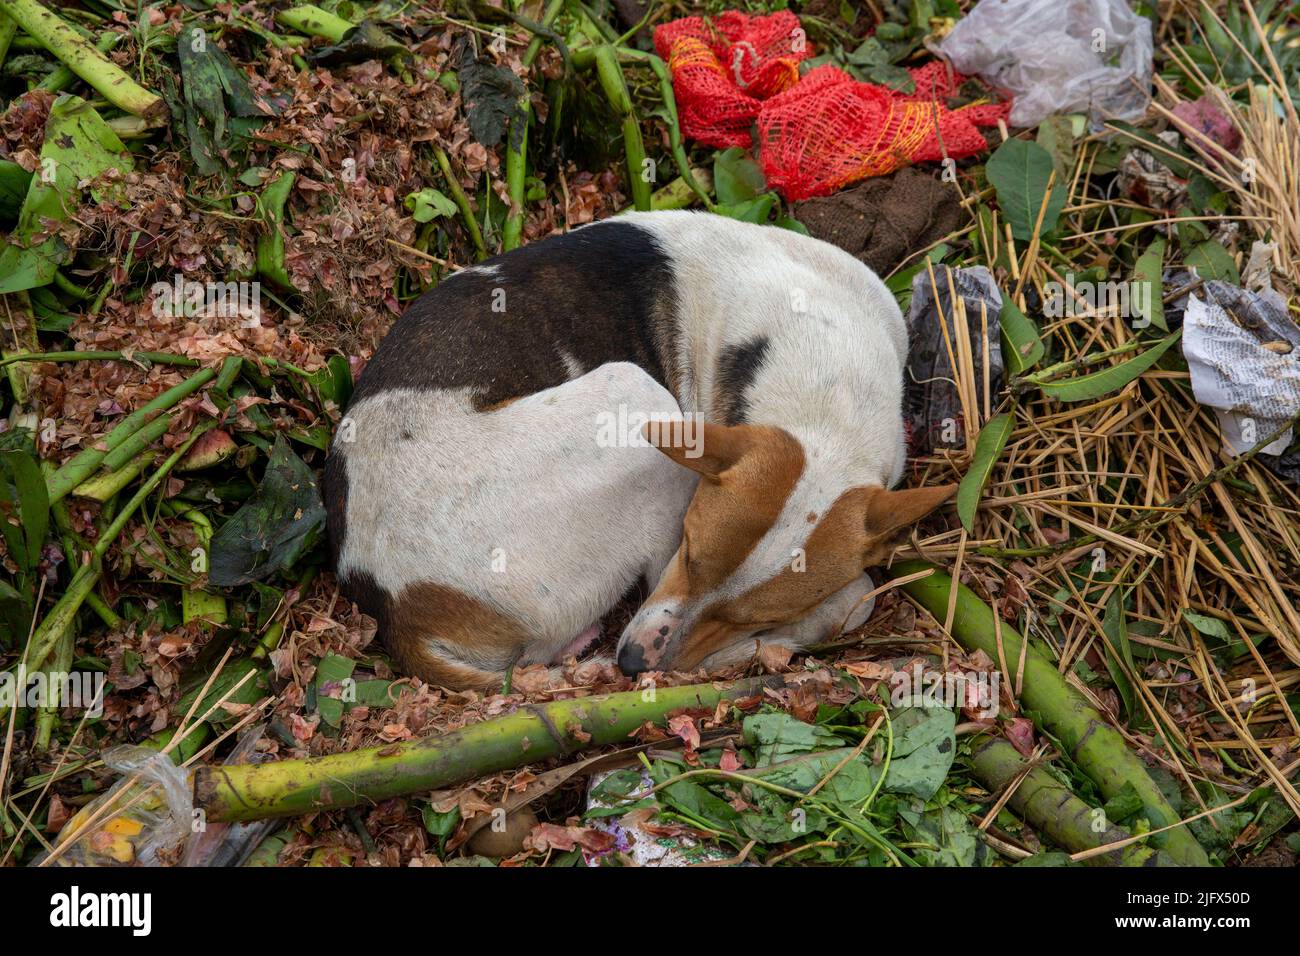 Street dog sleep on the garbage, Dhaka, Bangladesh Stock Photo